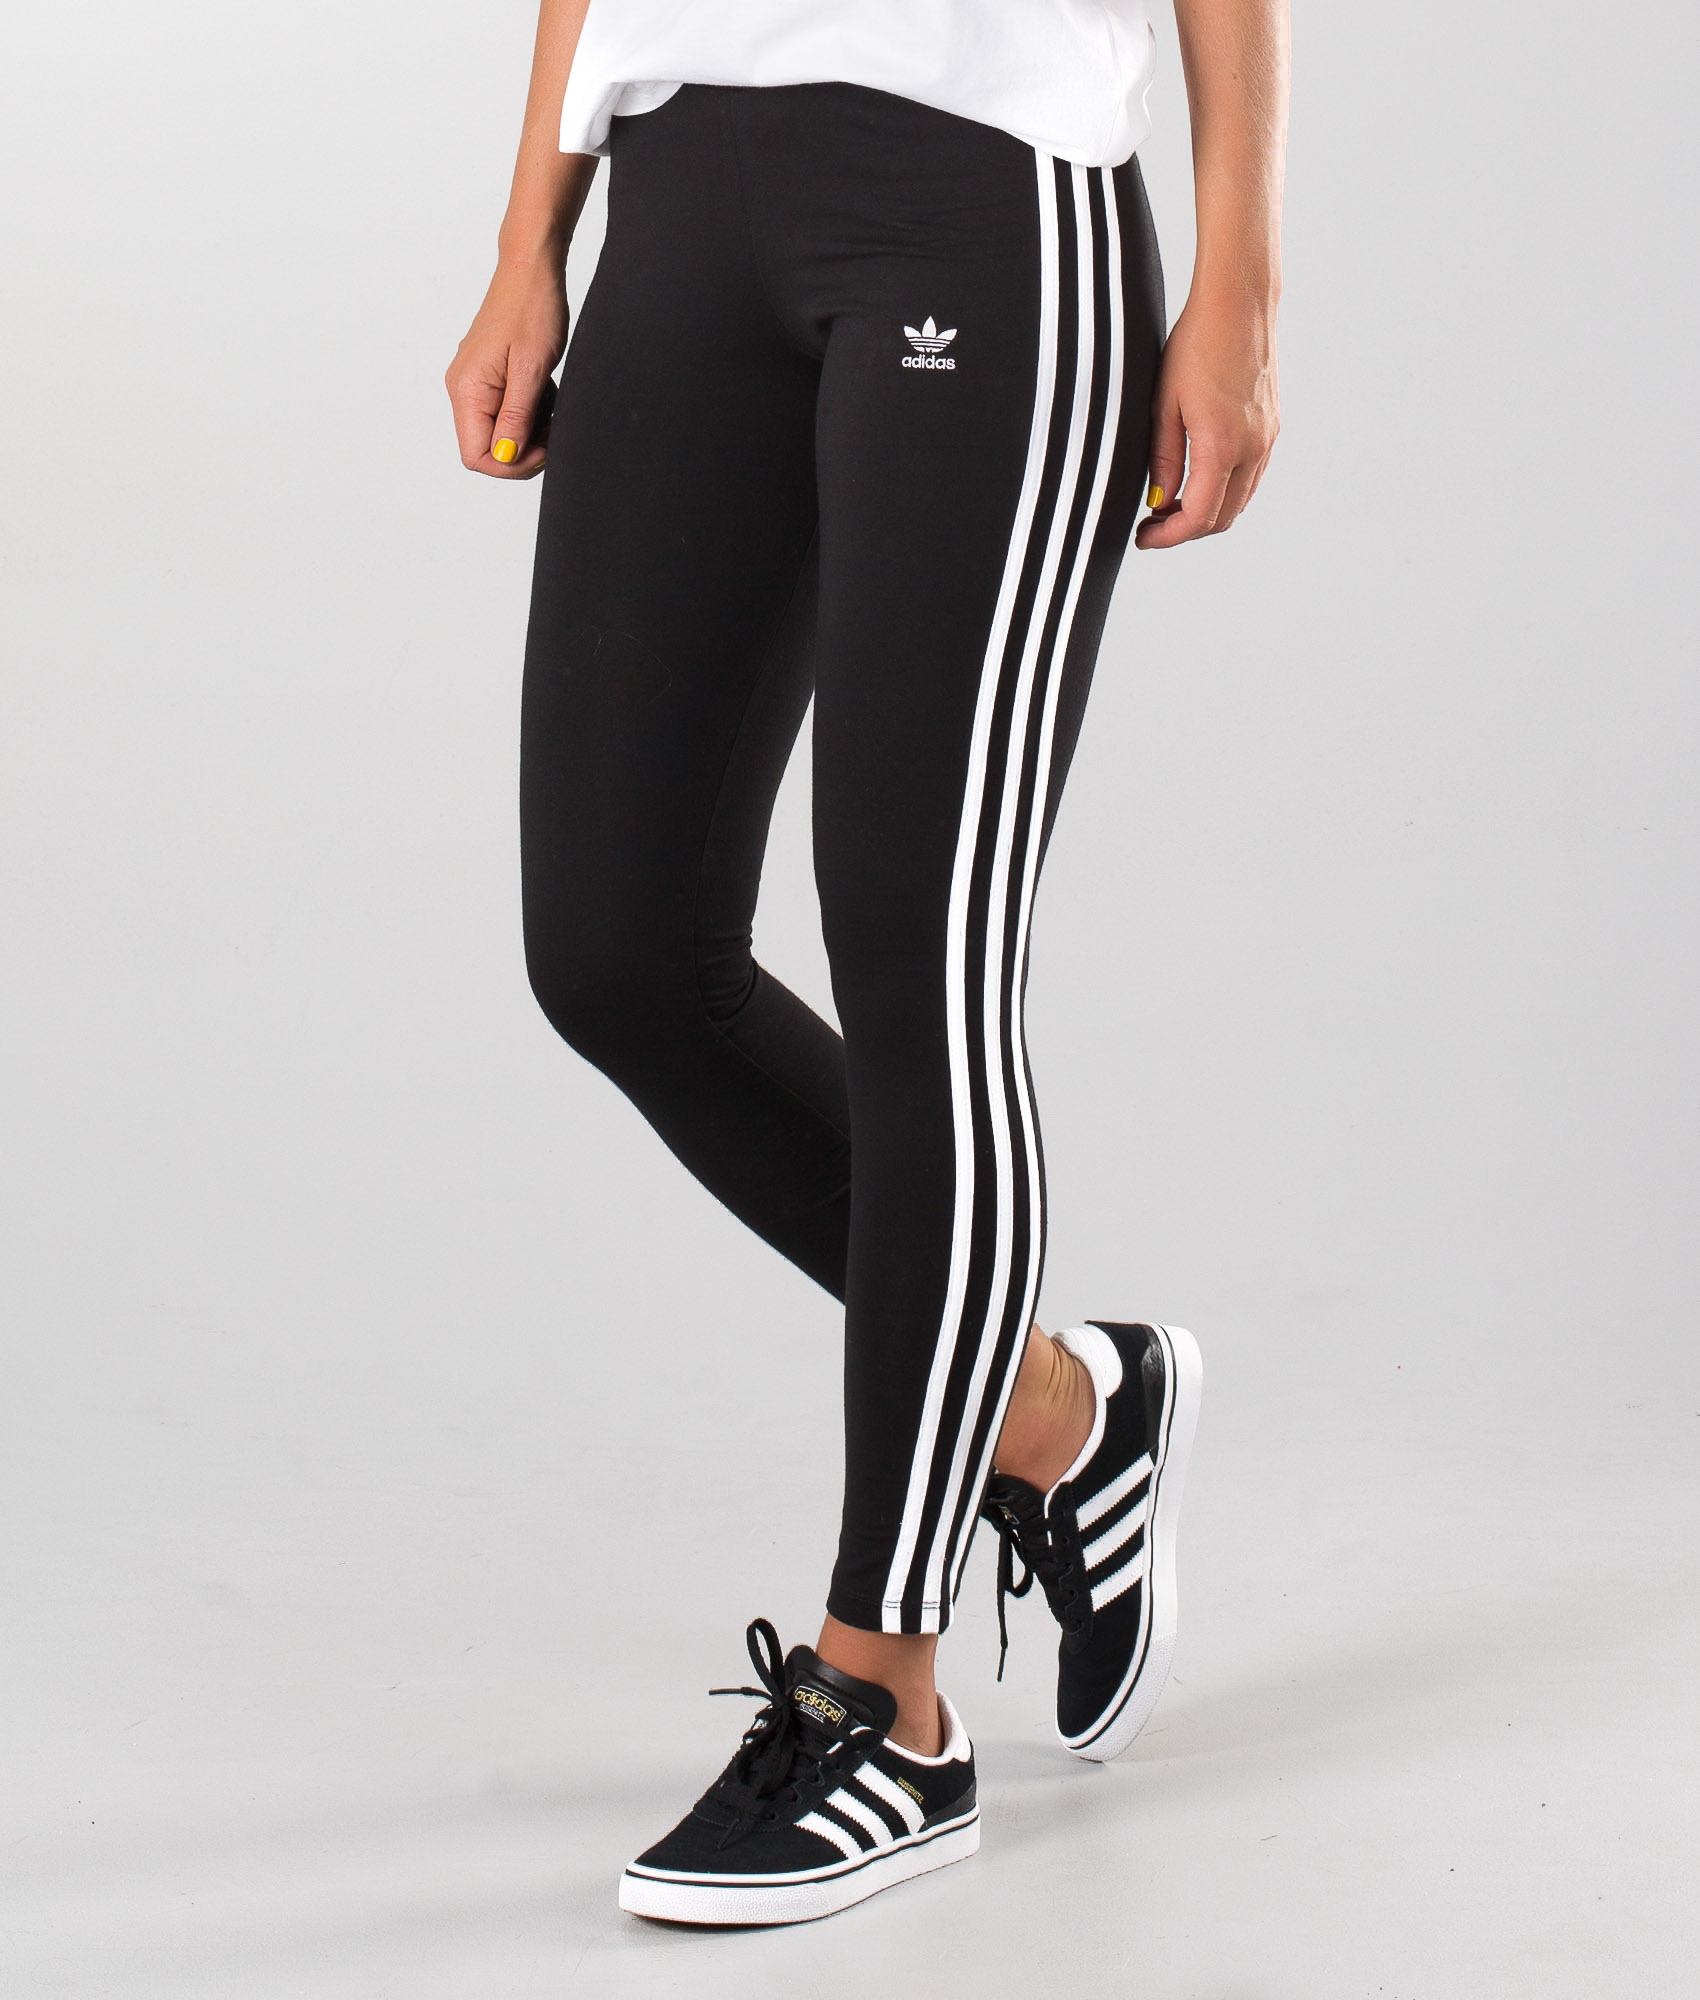 شيبس شوكلت Adidas Originals 3-Stripes Leggings Black شيبس شوكلت